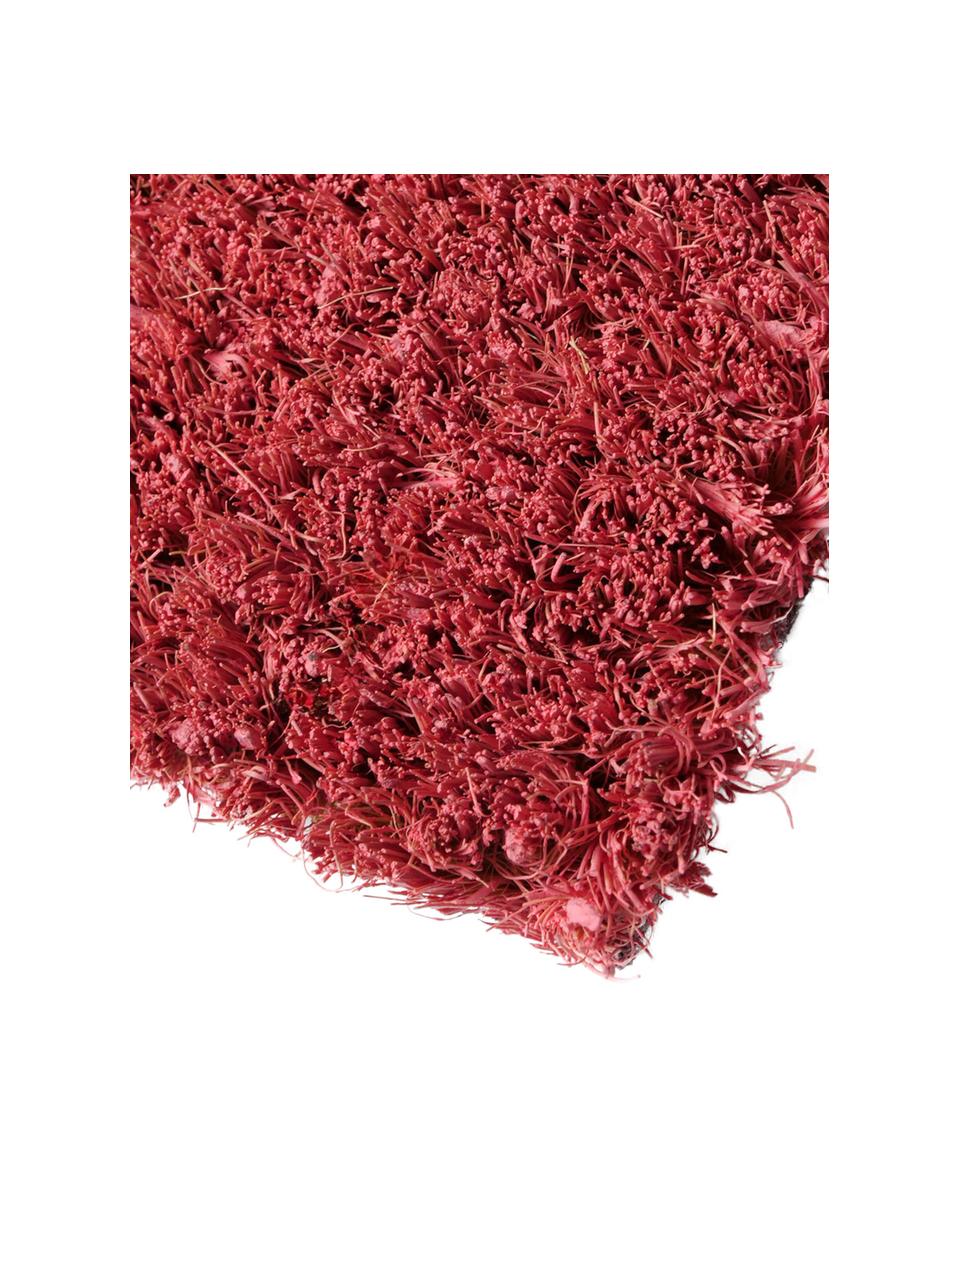 Felpudo Love, Parte superior: fibras de coco, Reverso: plástico (PVC), Rojo, blanco, An 40 x L 60 cm